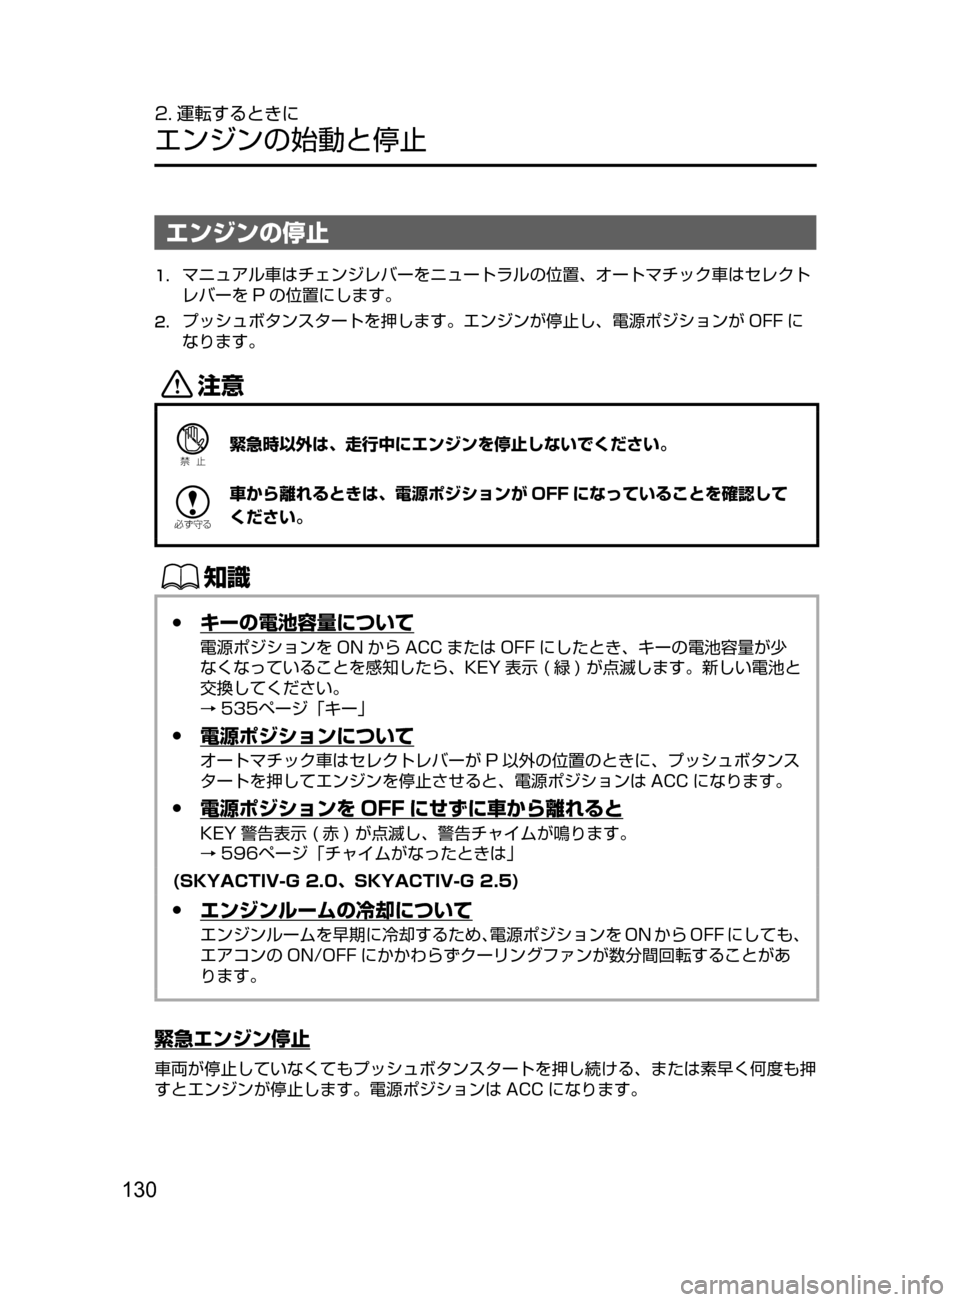 MAZDA MODEL ATENZA 2016  アテンザ｜取扱説明書 (in Japanese) 130
2. 運転するときに
エンジンの始動と停止
エンジンの停止
1.	マニュアル車はチェンジレバーをニュートラルの位置､ オートマチック車はセレクト